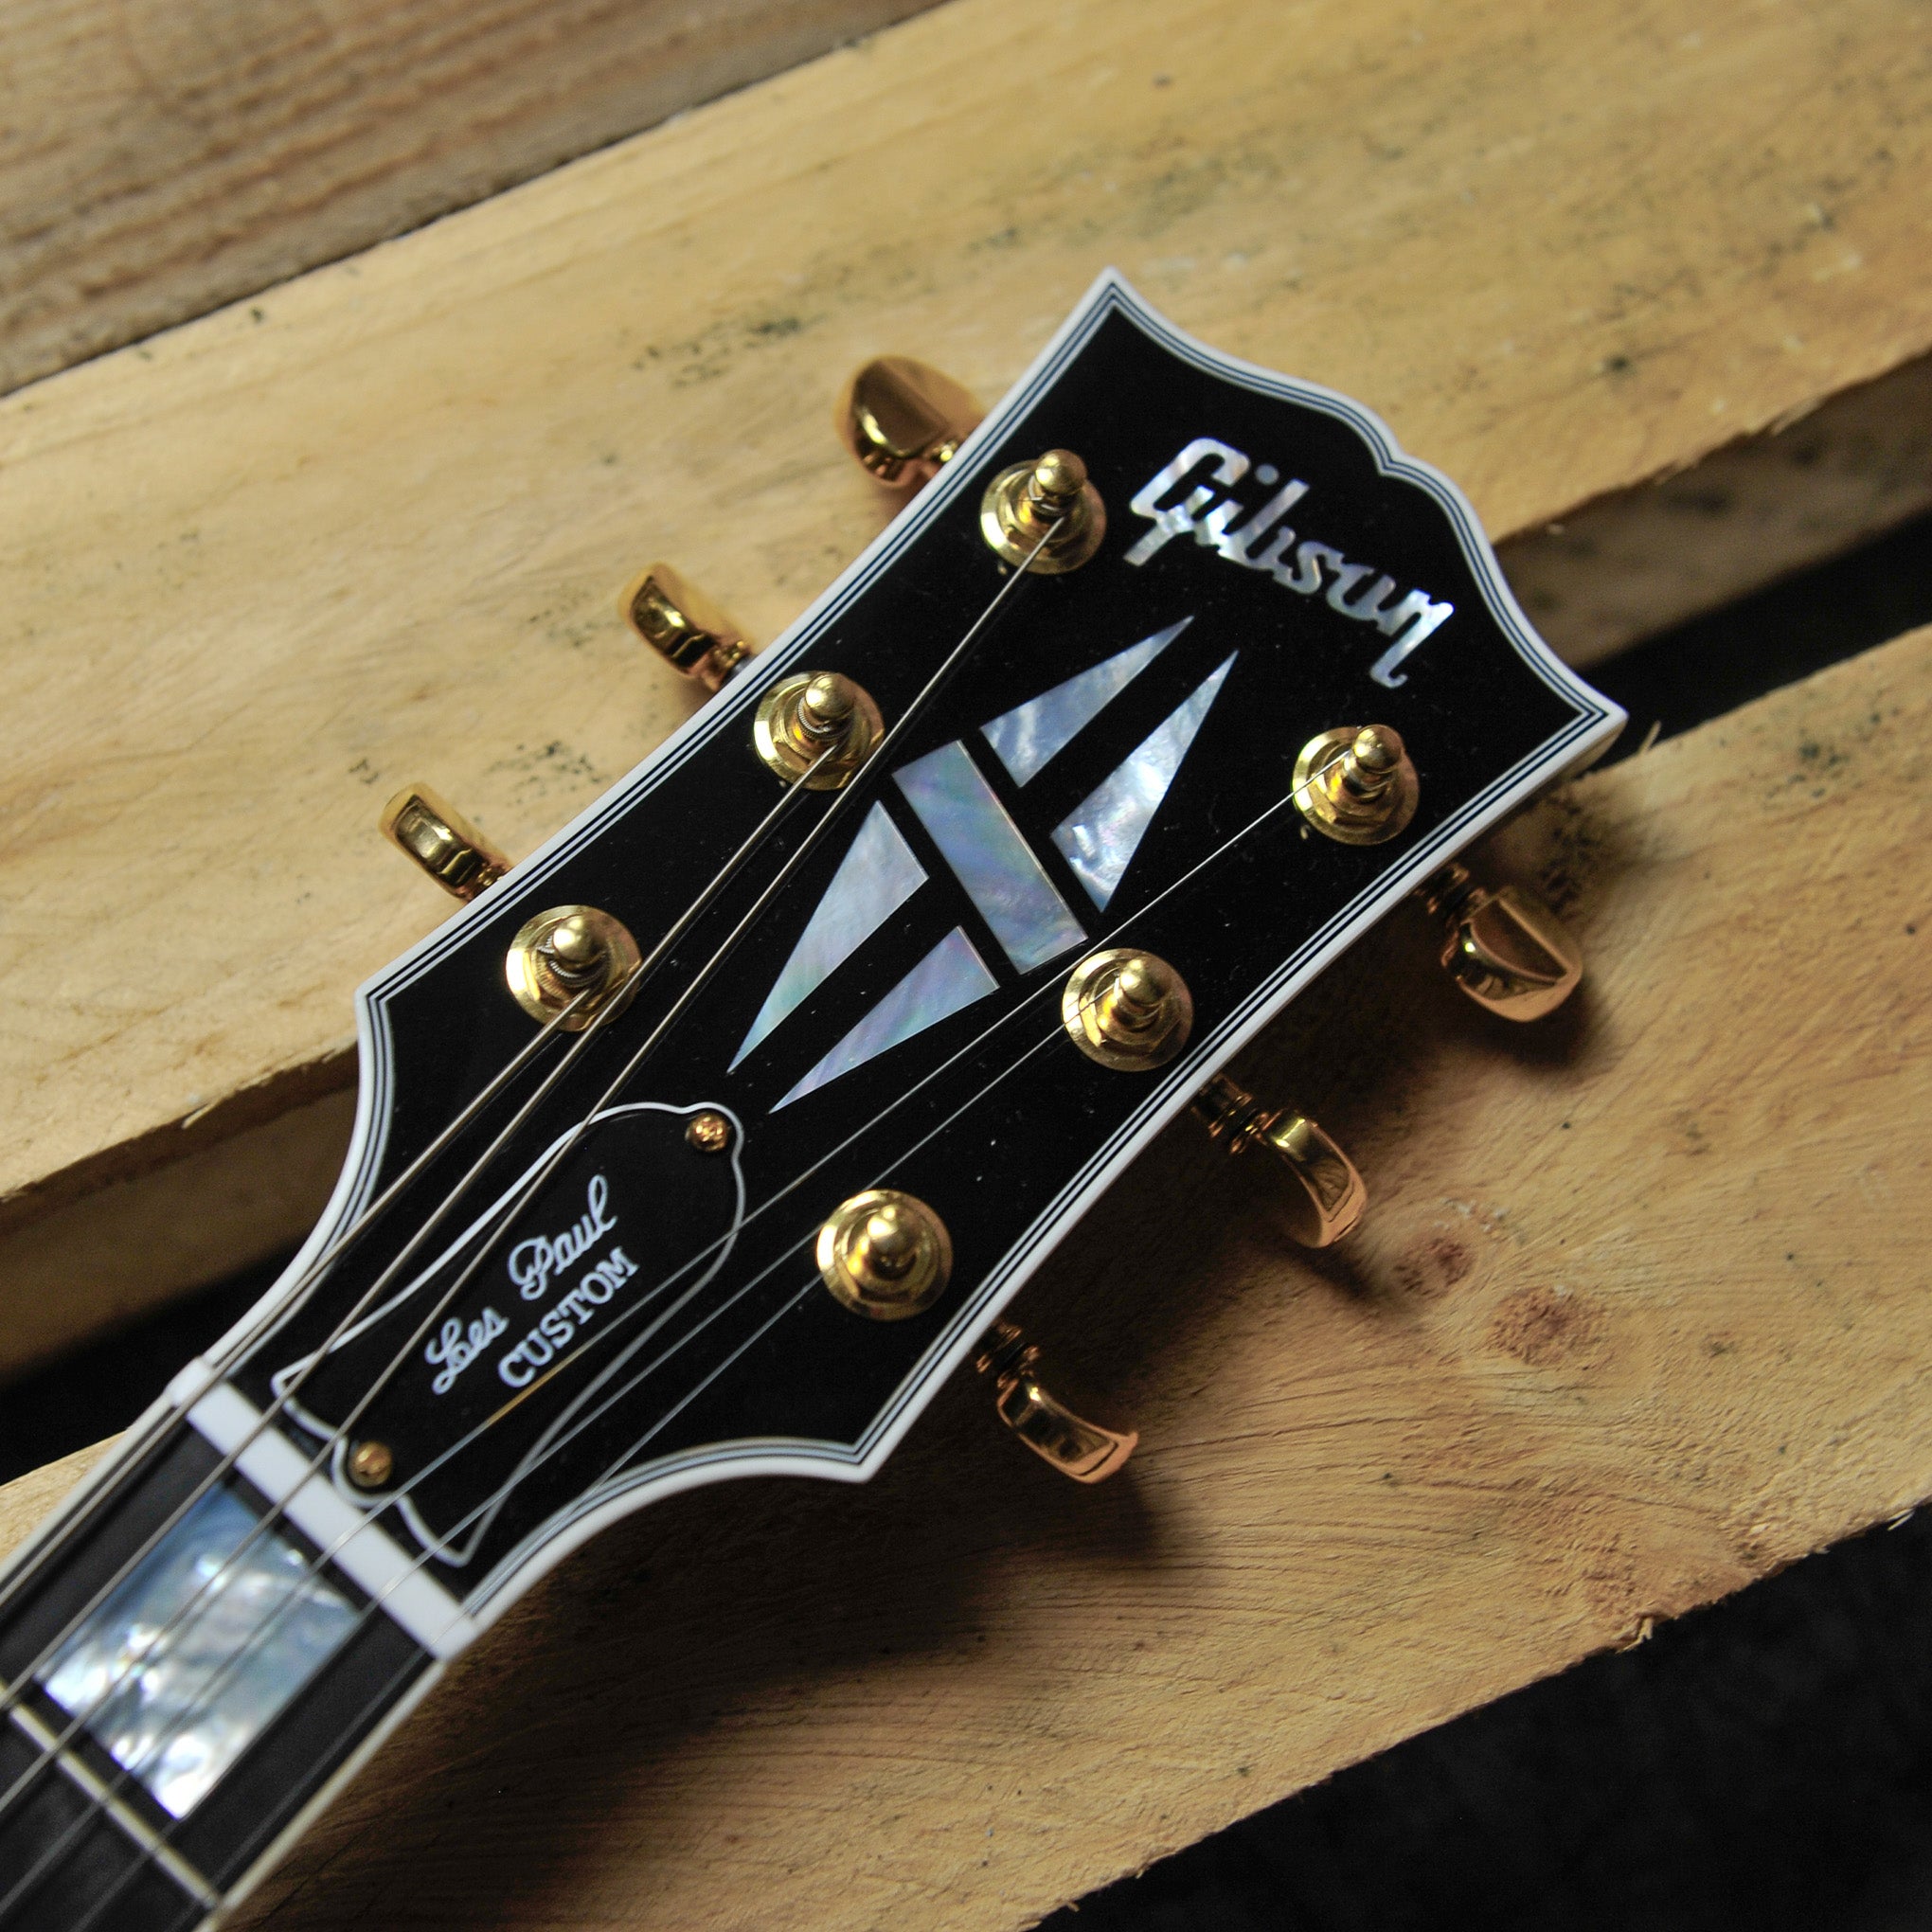 Gibson Les Paul Custom  - Ebony (Black) “2022” w/Case - Used